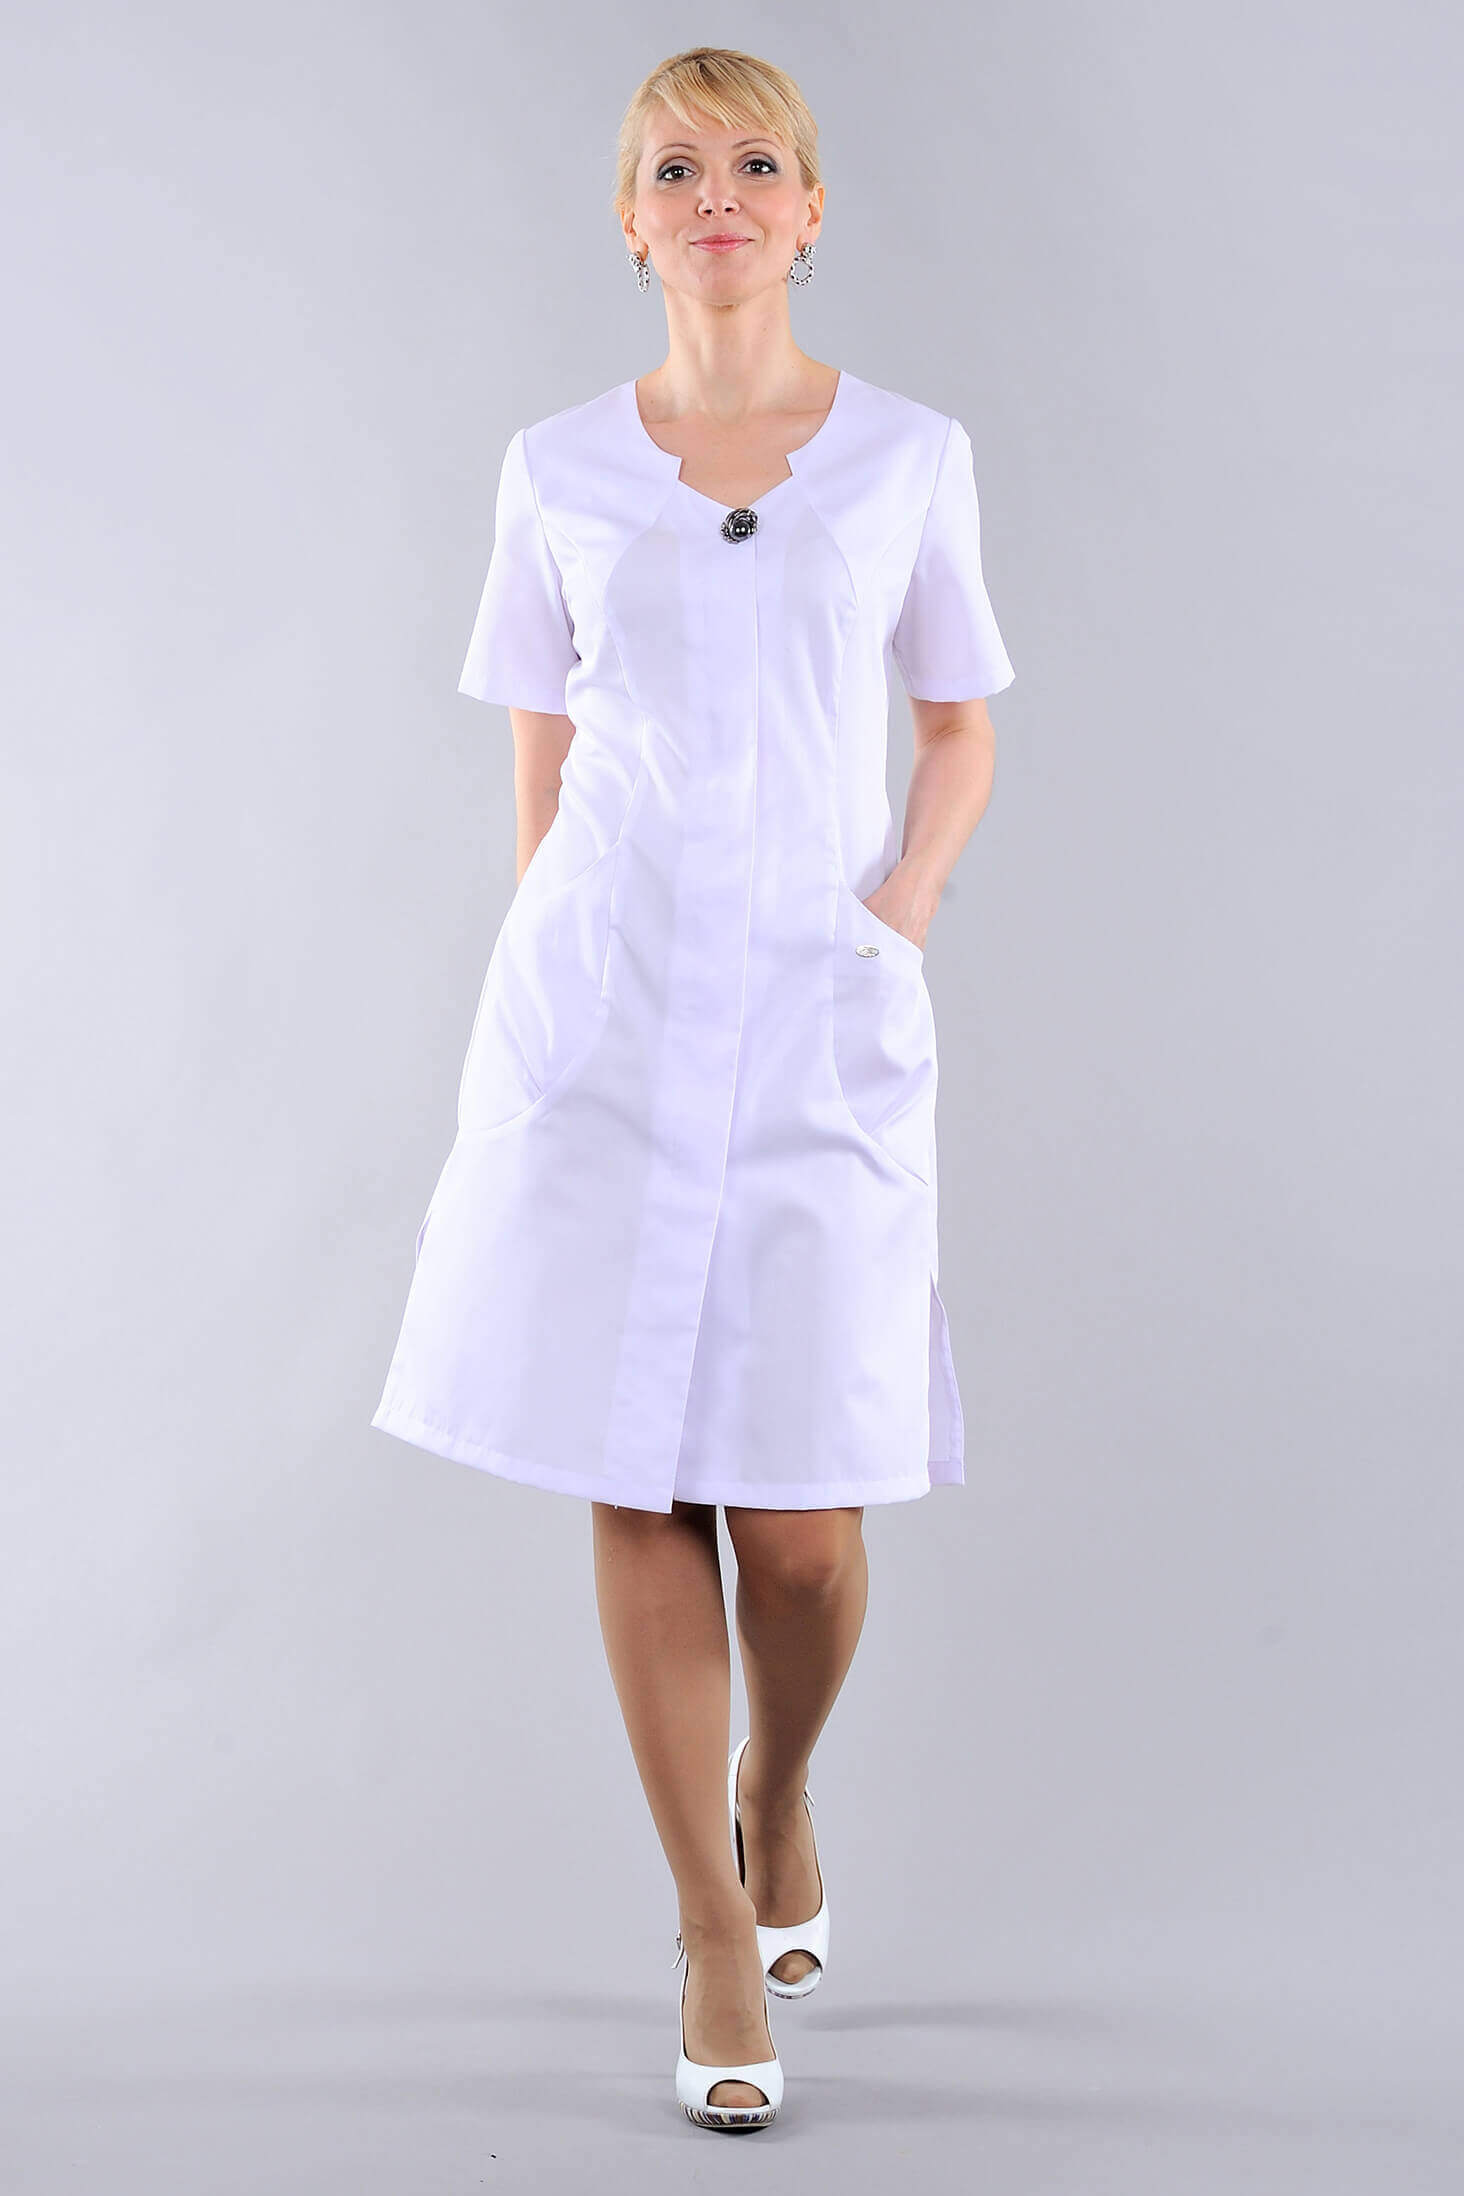 Медсестра в коротком халате. Халат медицинский женский. Медсестра в халате. Платье халат медицинский женский. Халат медицинский женский короткий.